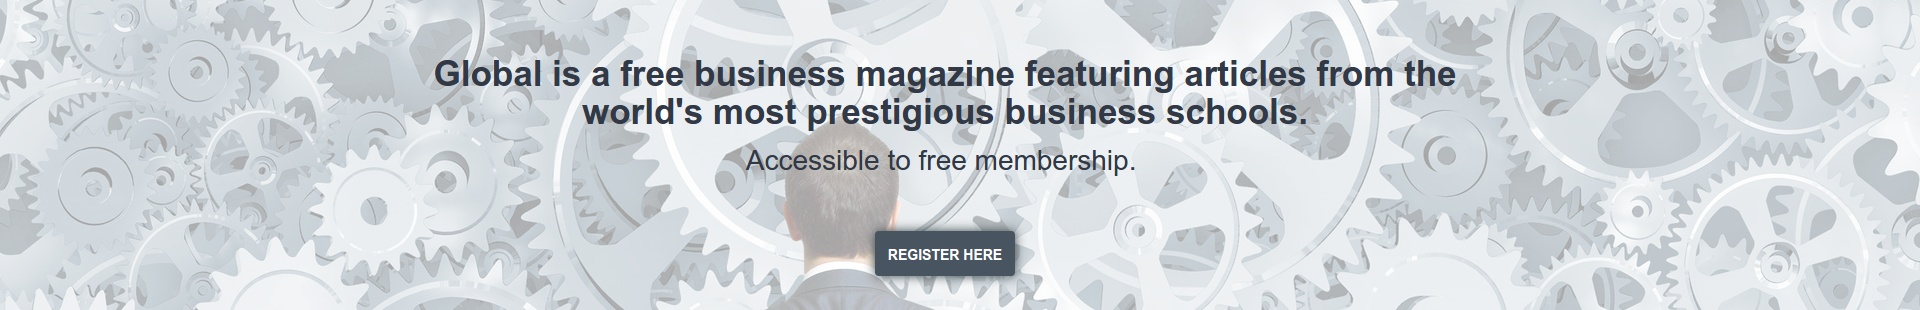 register for global free business magazine